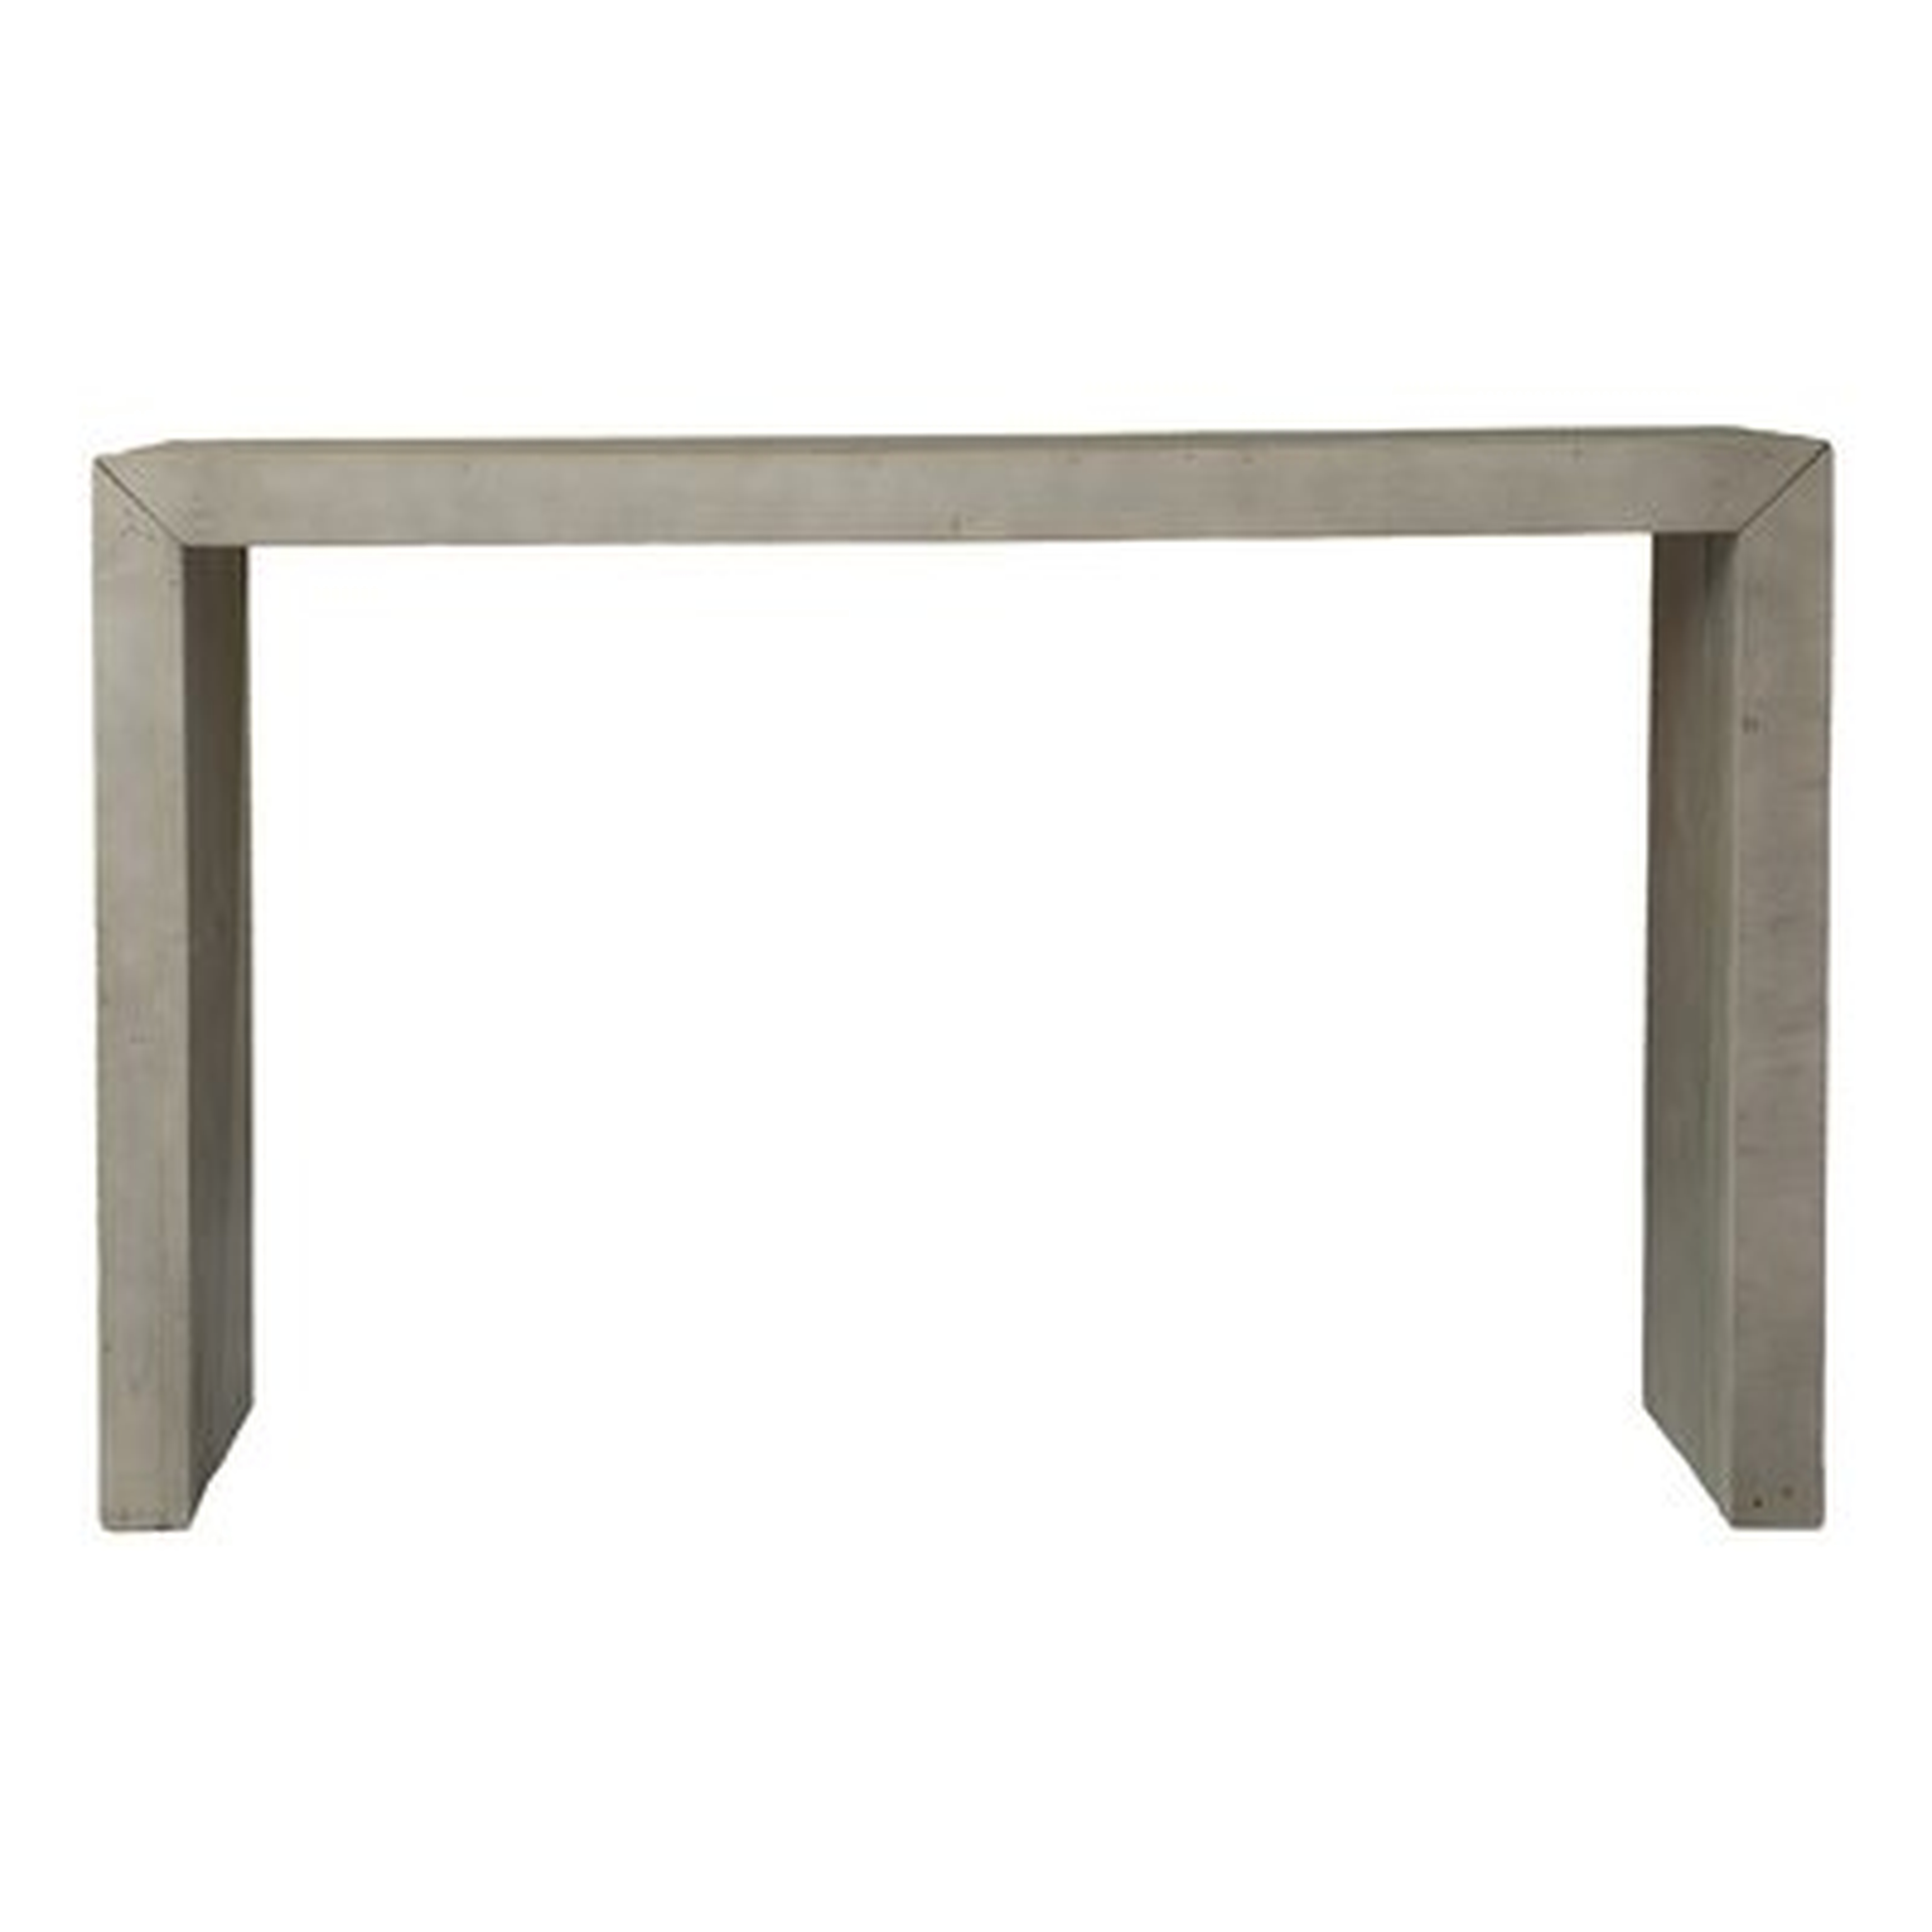 Reclaimed Wood Console Table, Gray - Wayfair